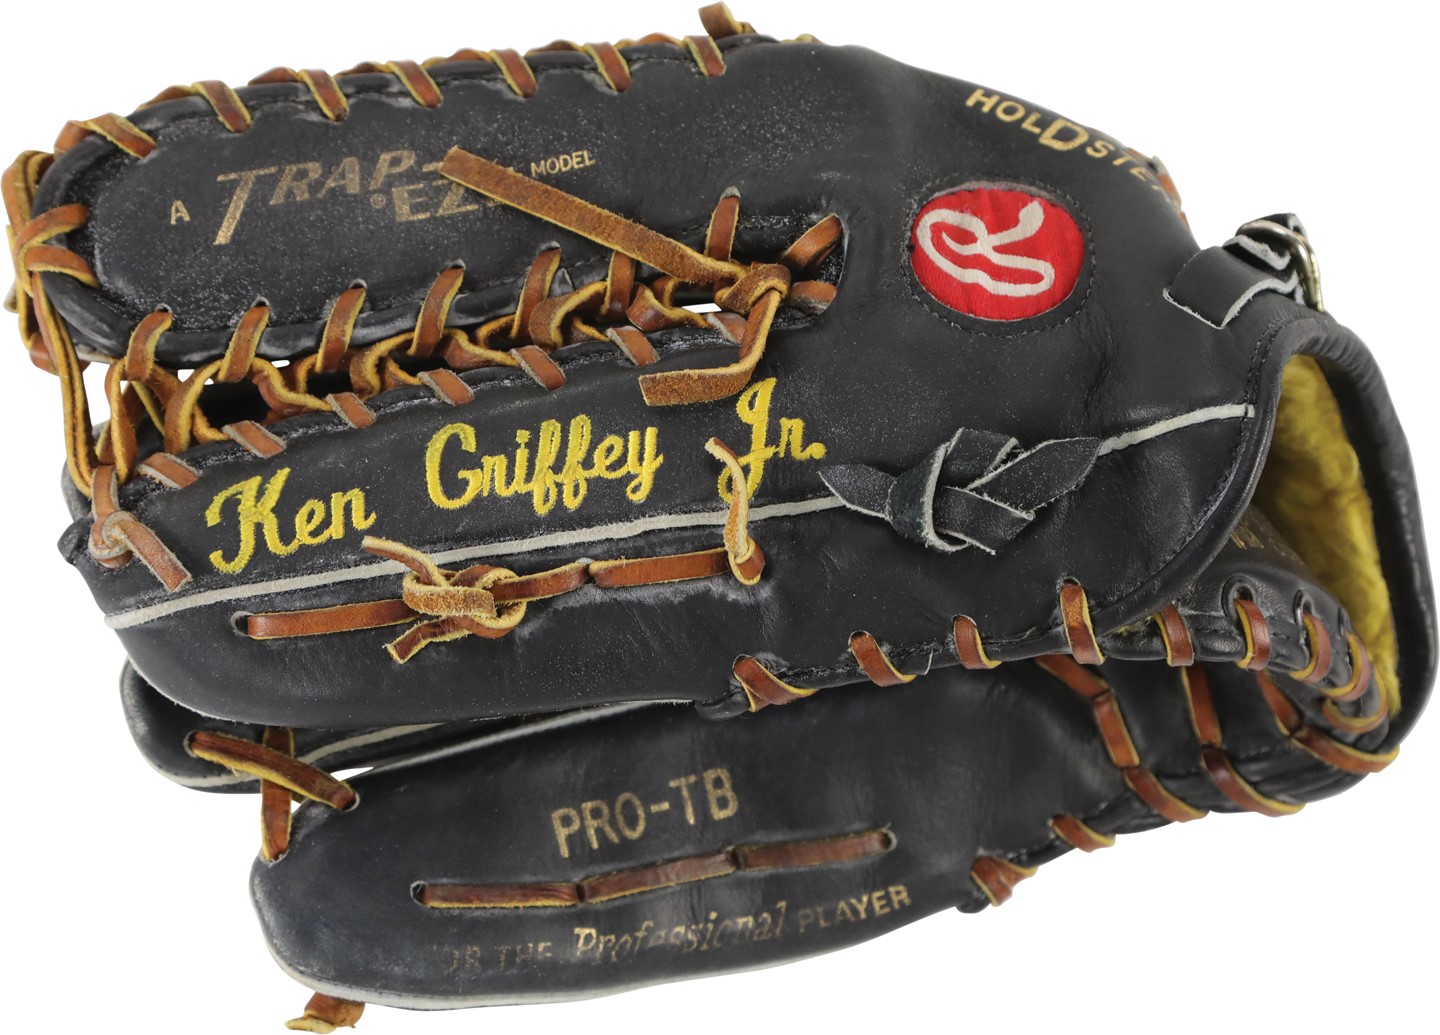 Ken Griffey, Jr. Game Used Glove